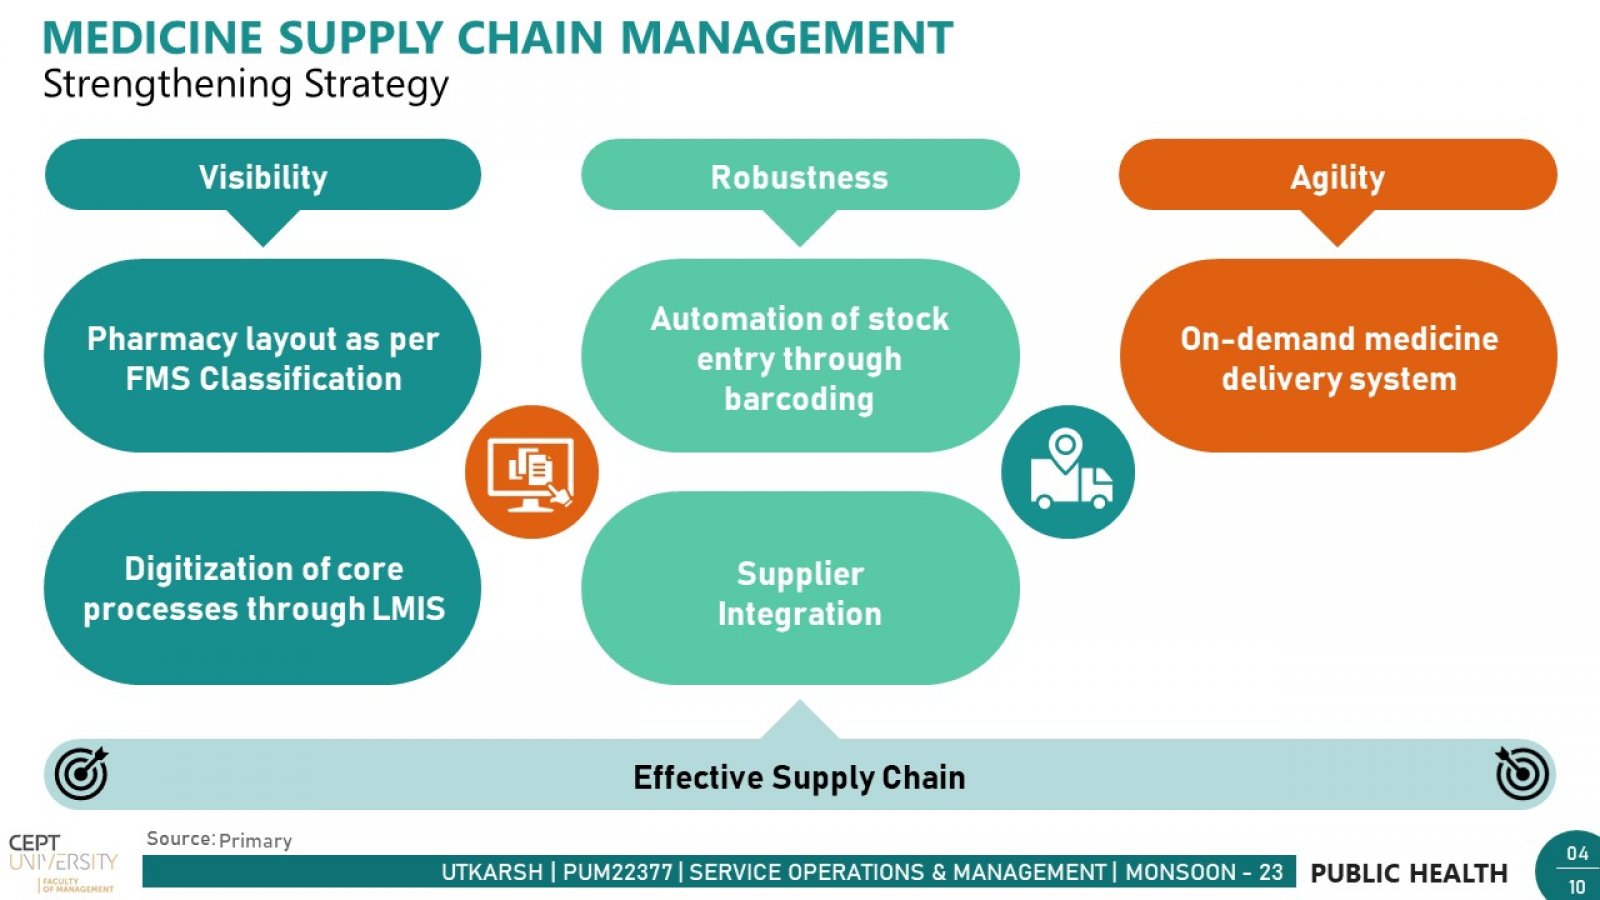 Ahmedabad: Medicine Supply Chain Management | CEPT - Portfolio